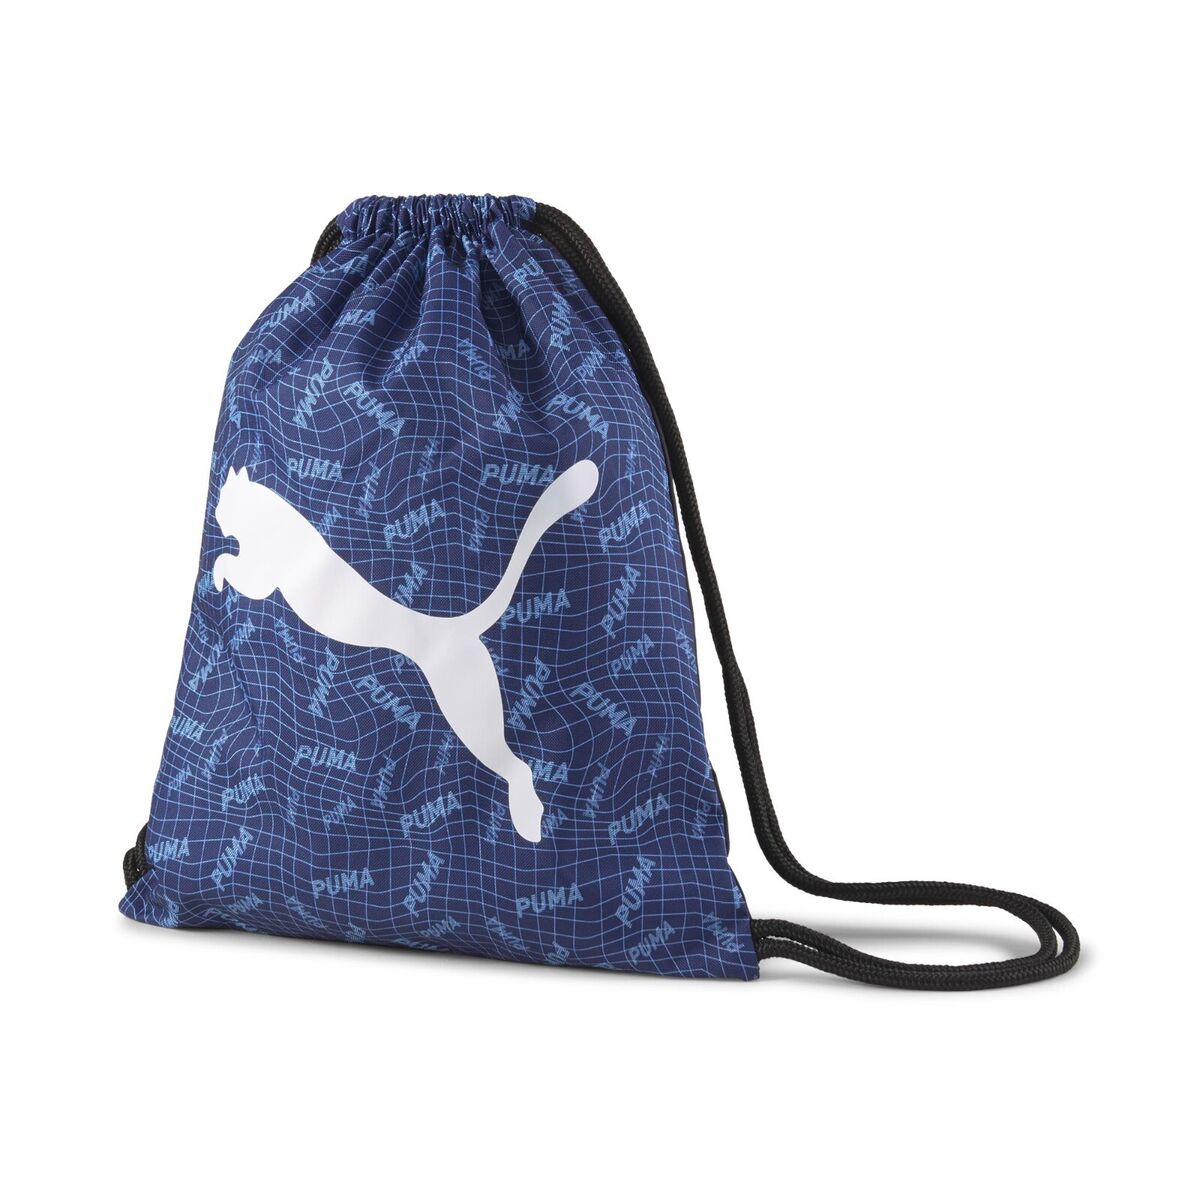 Puma Beta Gym Sack - Drawstring Bag Backpack - New | eBay